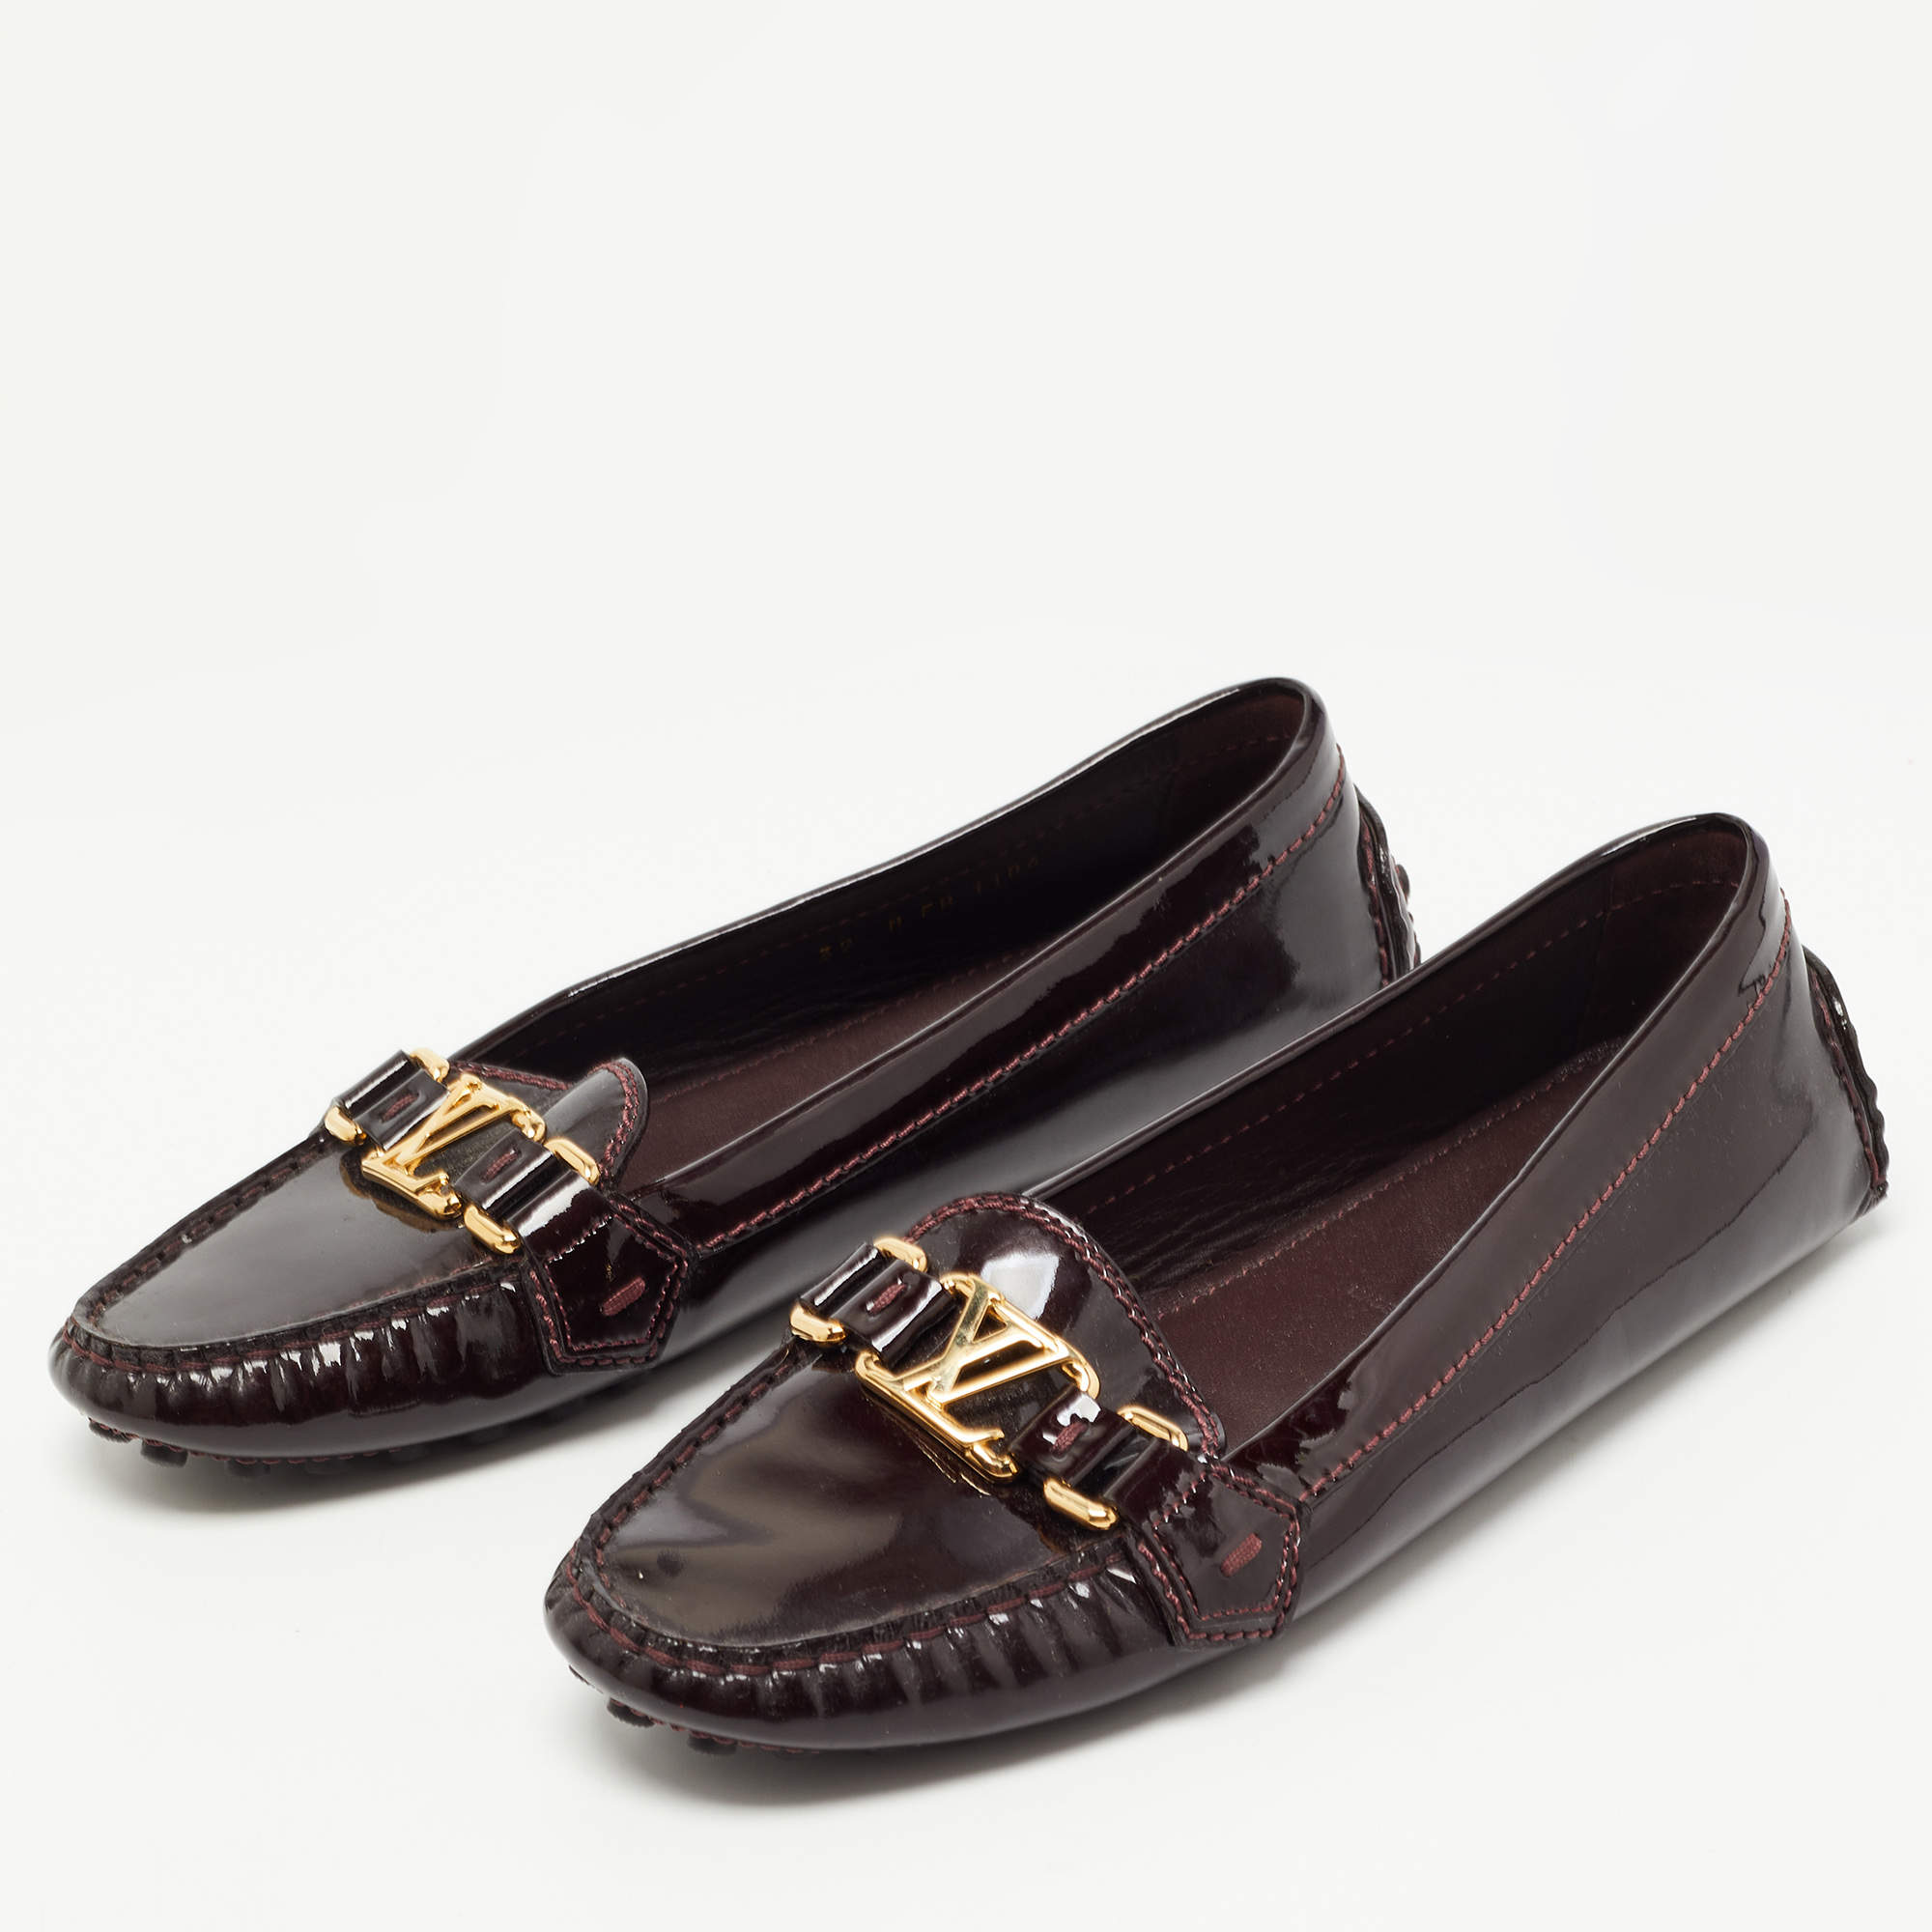 Louis Vuitton Brown Patent Leather Lv Monogram Loafers Flats Size: EU 39.5